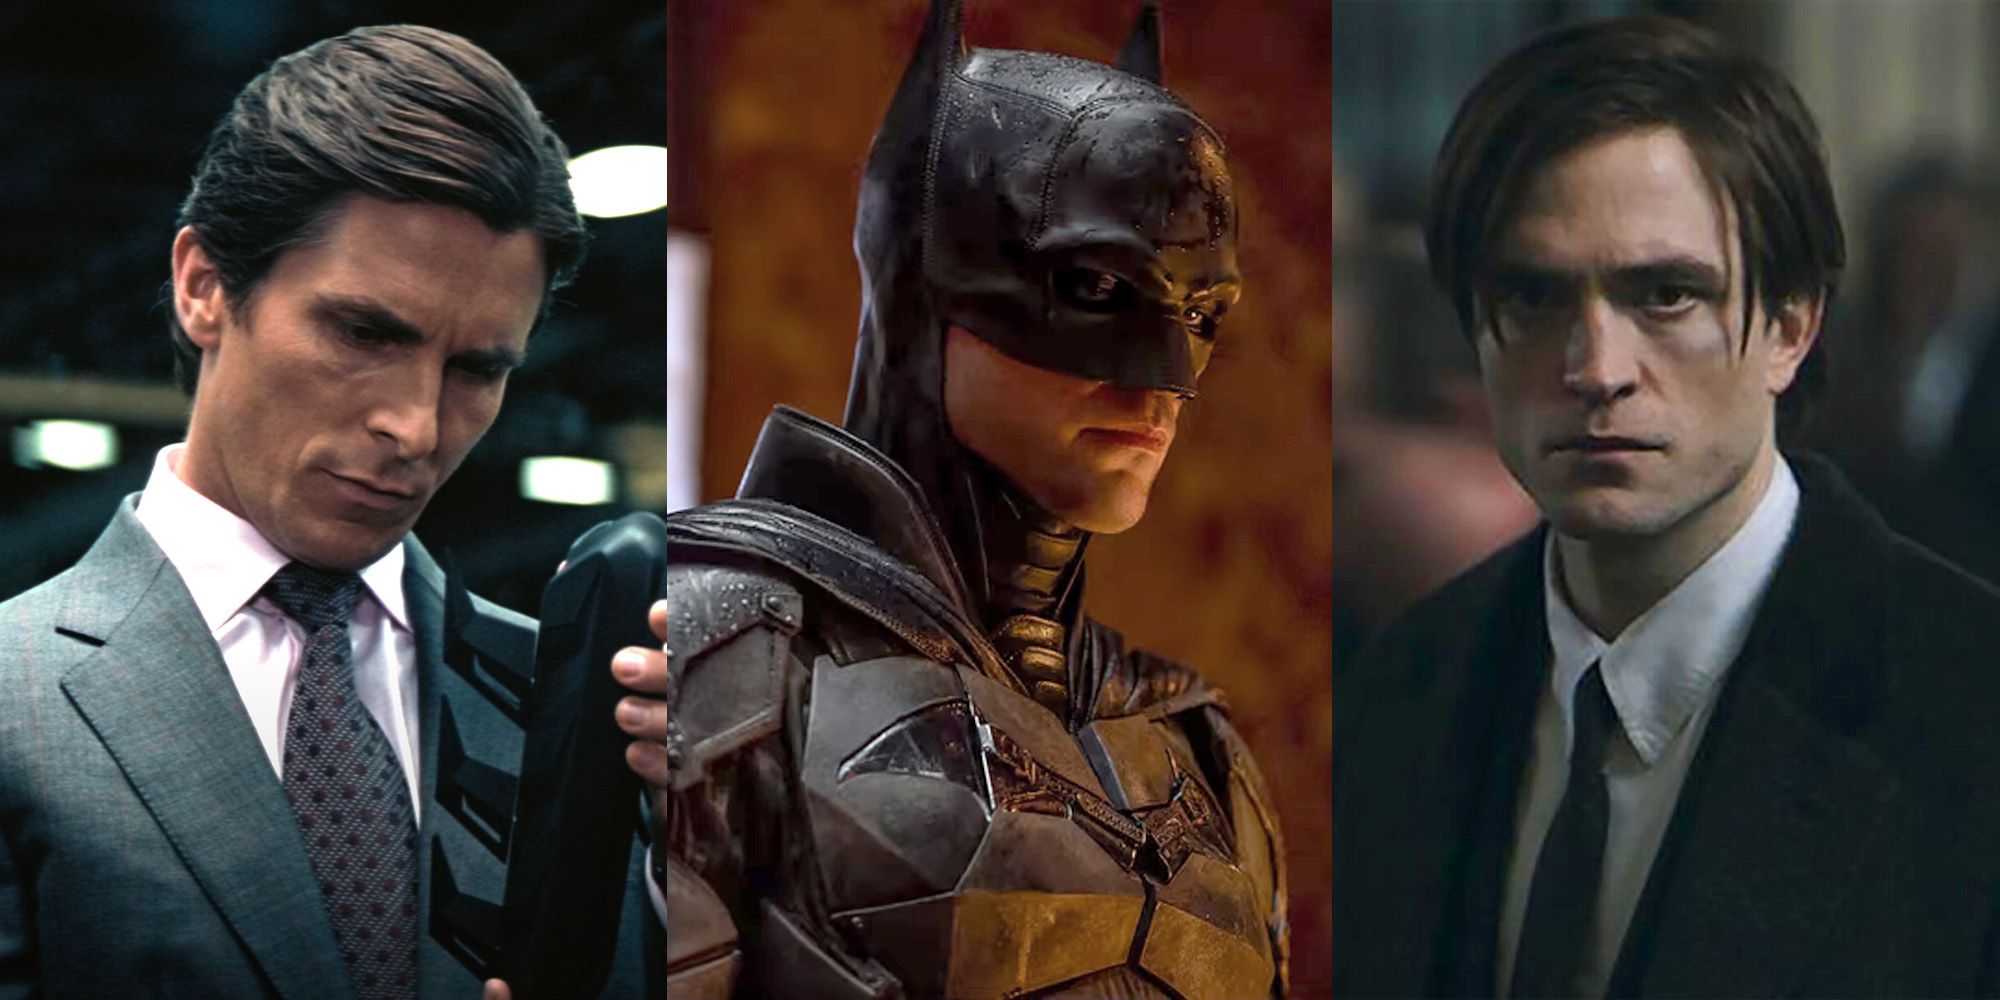 Robert Pattinson Vs. Christian Bale: Who Is The Better Batman?